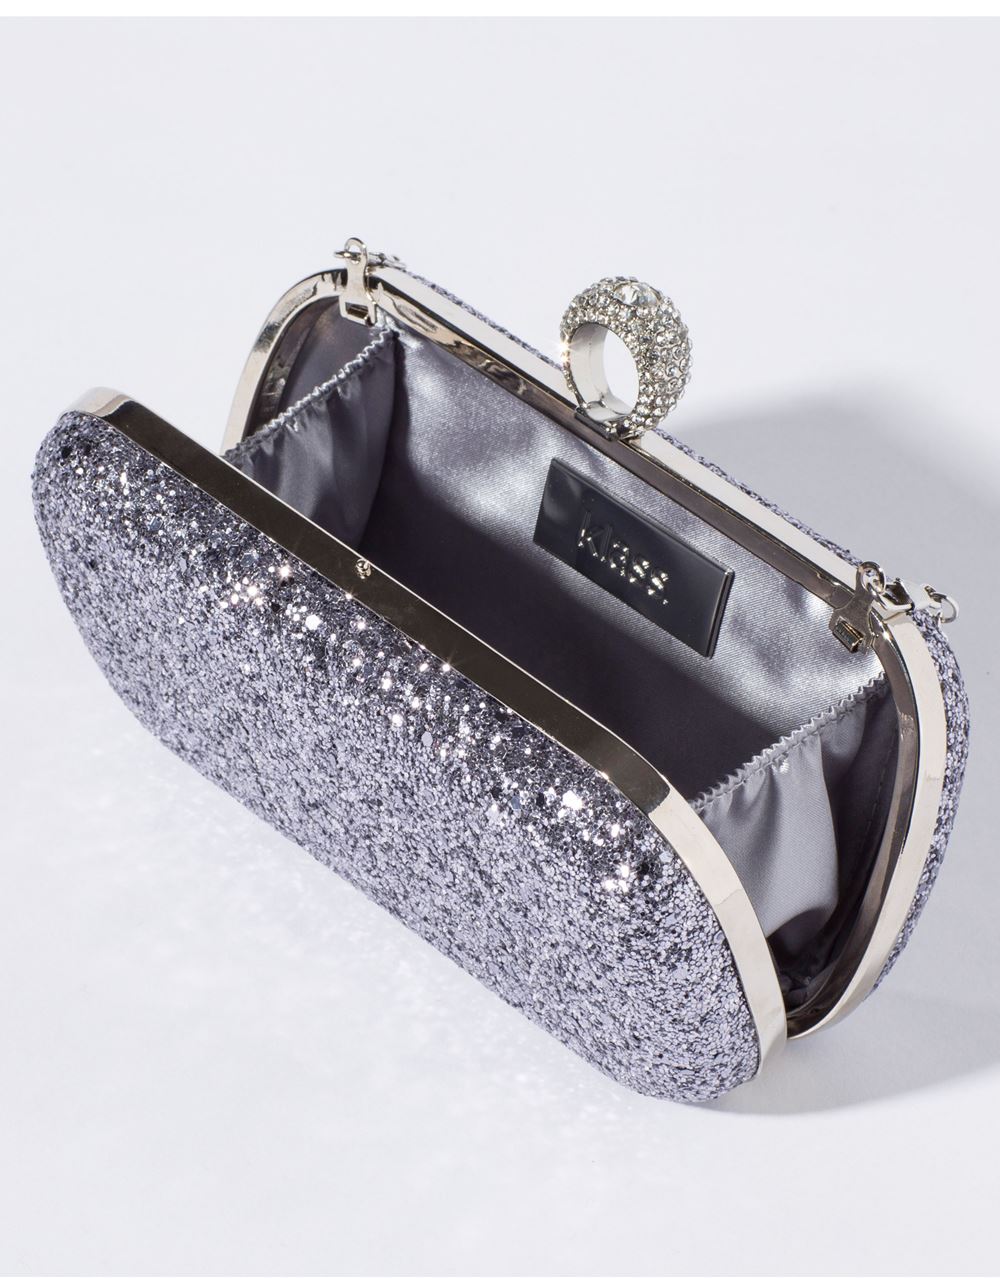 Embellished Glitter Box Clutch Bag